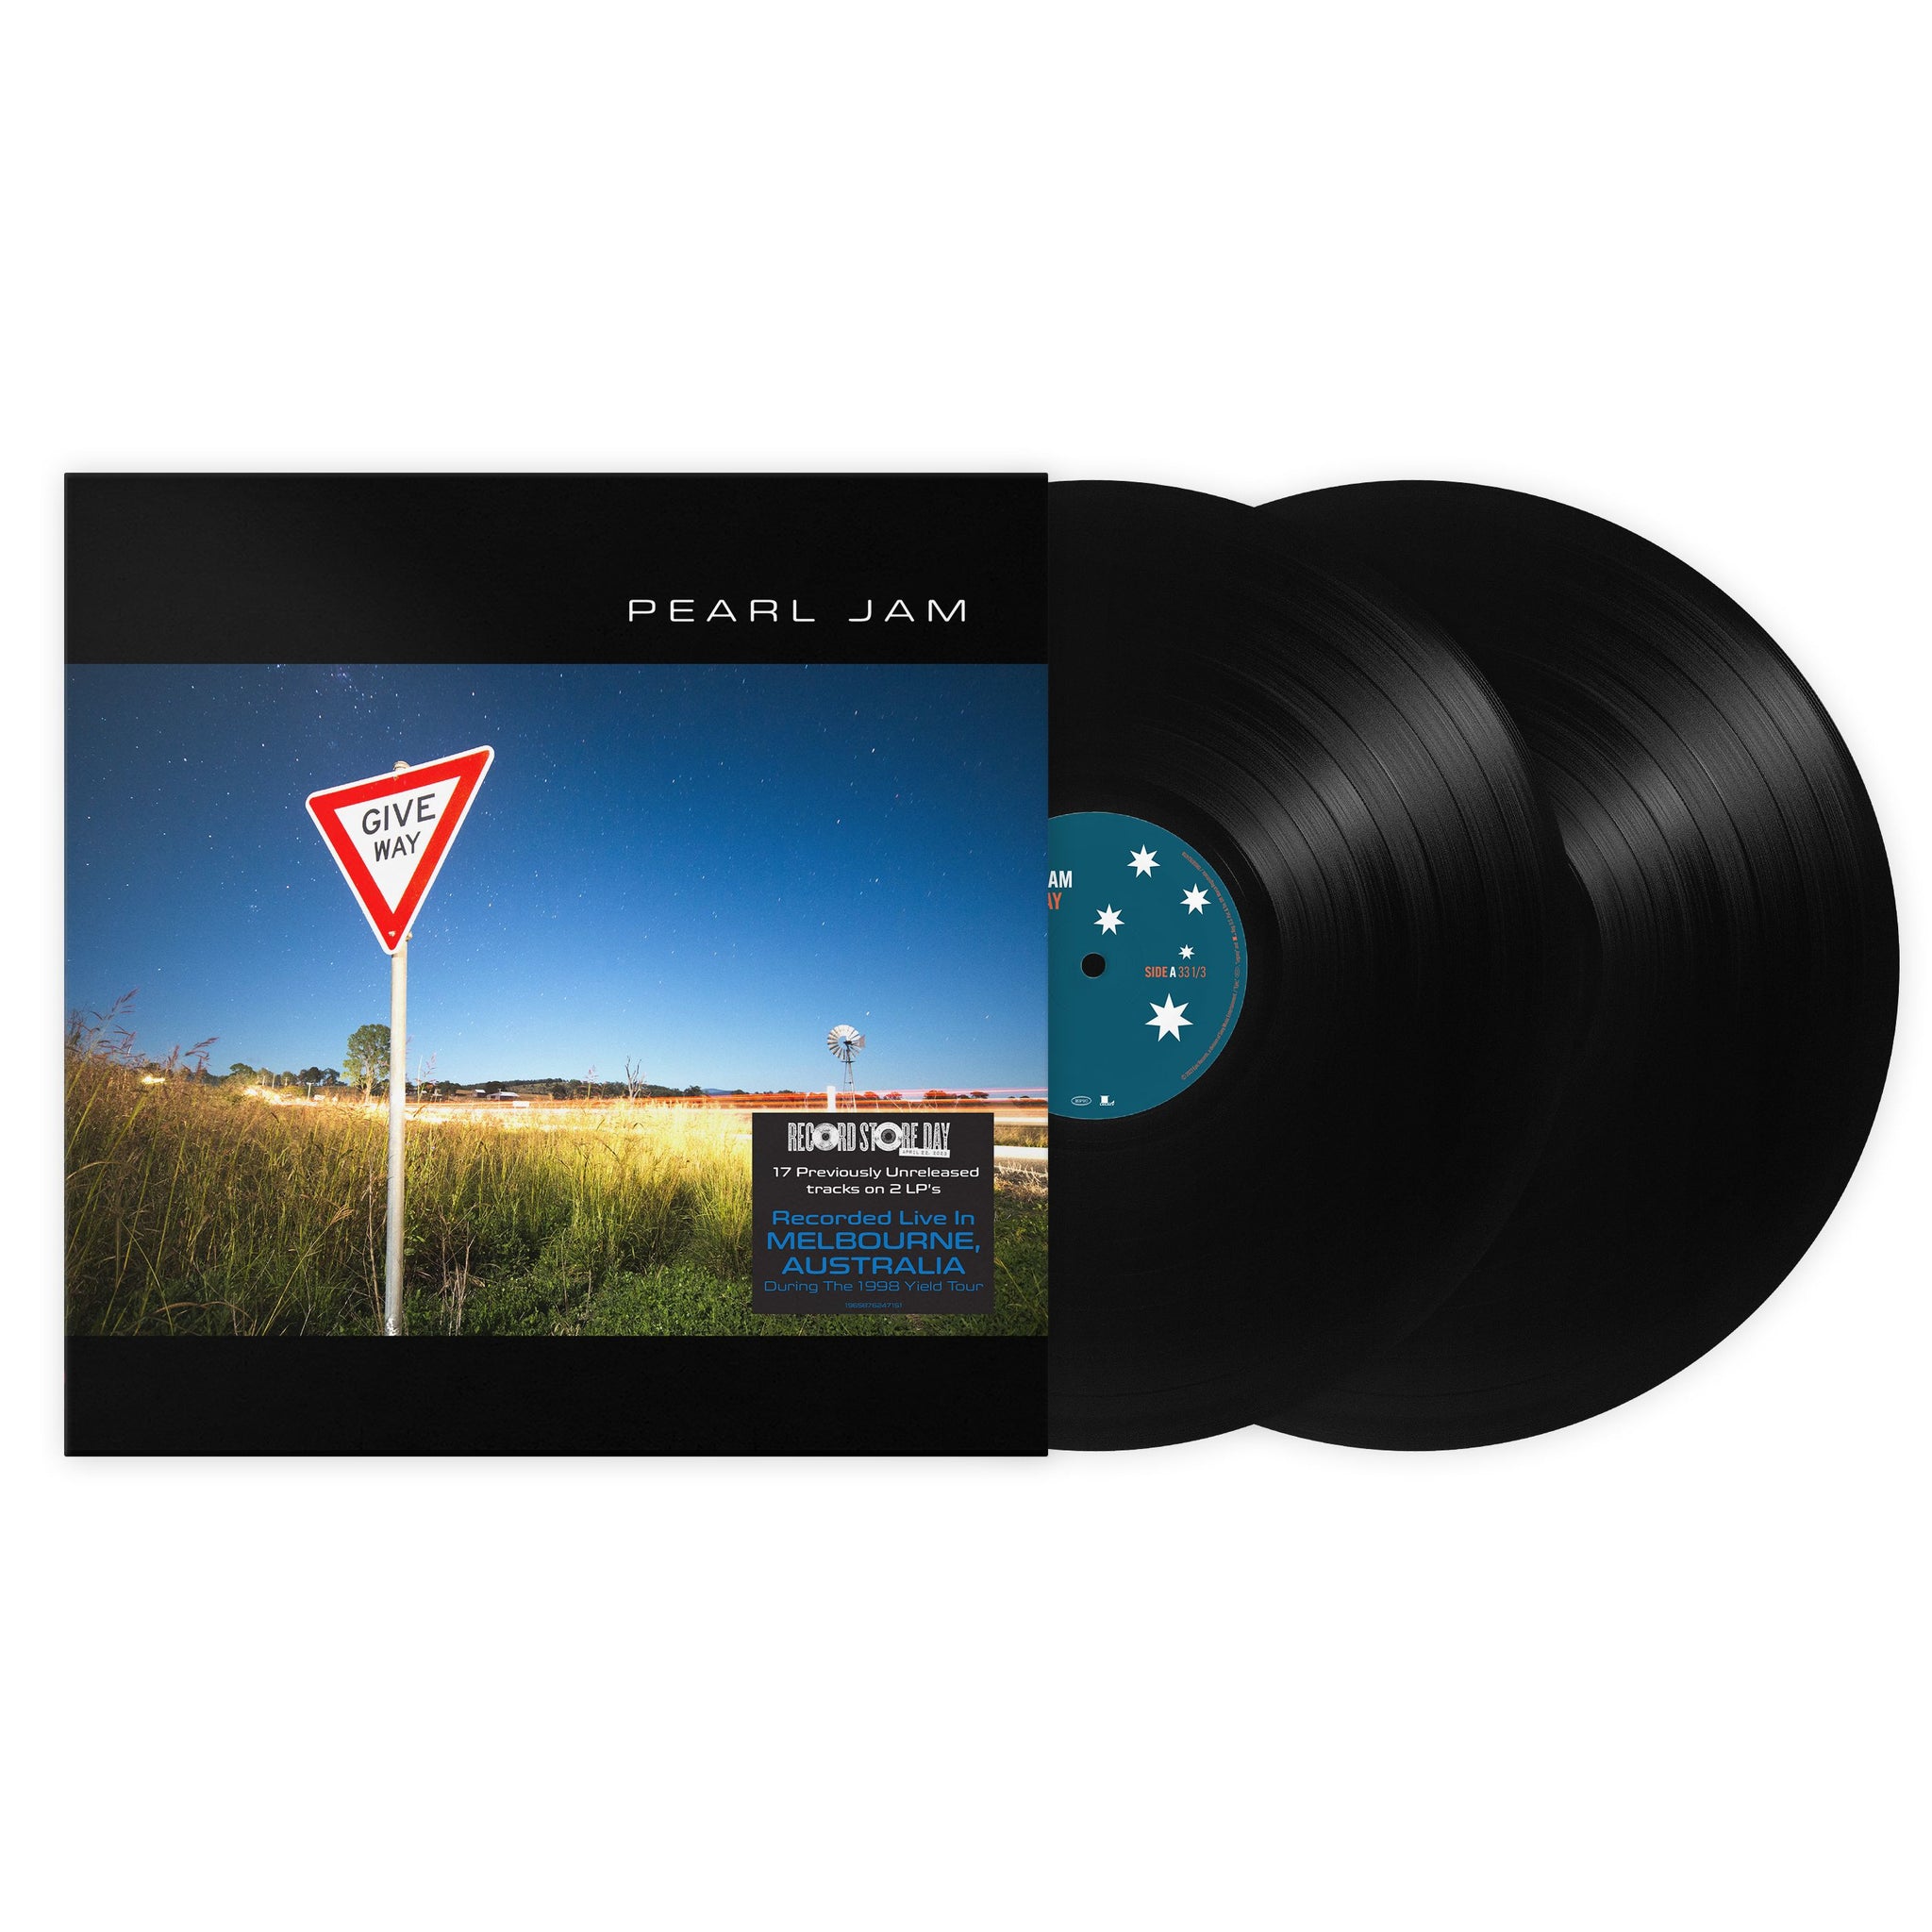 PEARL JAM - Give Way - 2LP - Vinyl [RSD23]